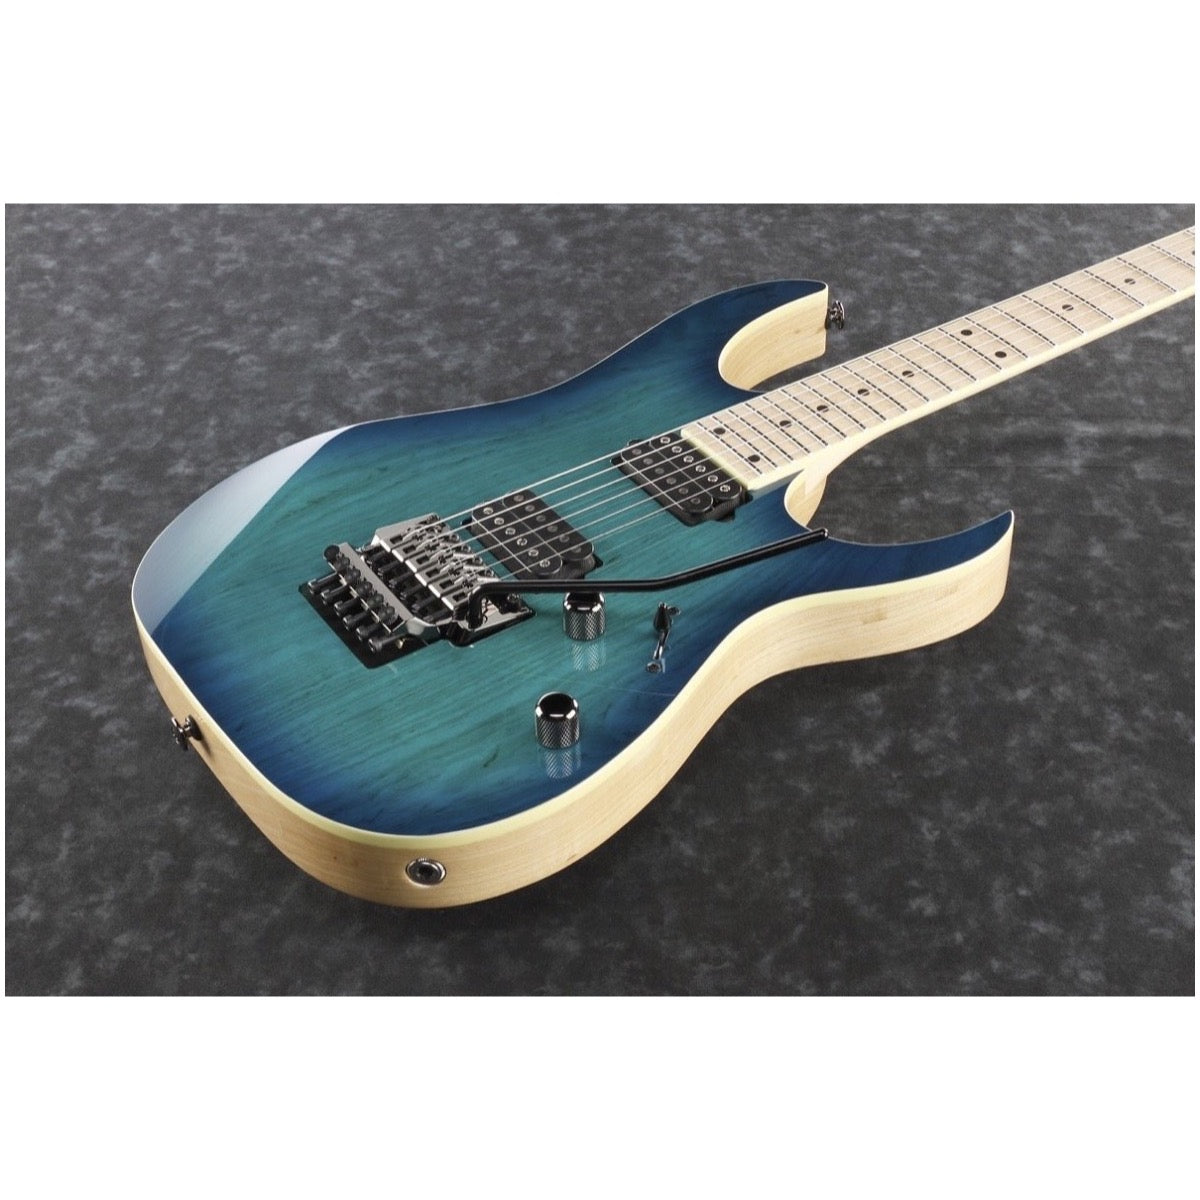 Ibanez RG652AHM Prestige Electric Guitar (with Case), Nebula Green Burst